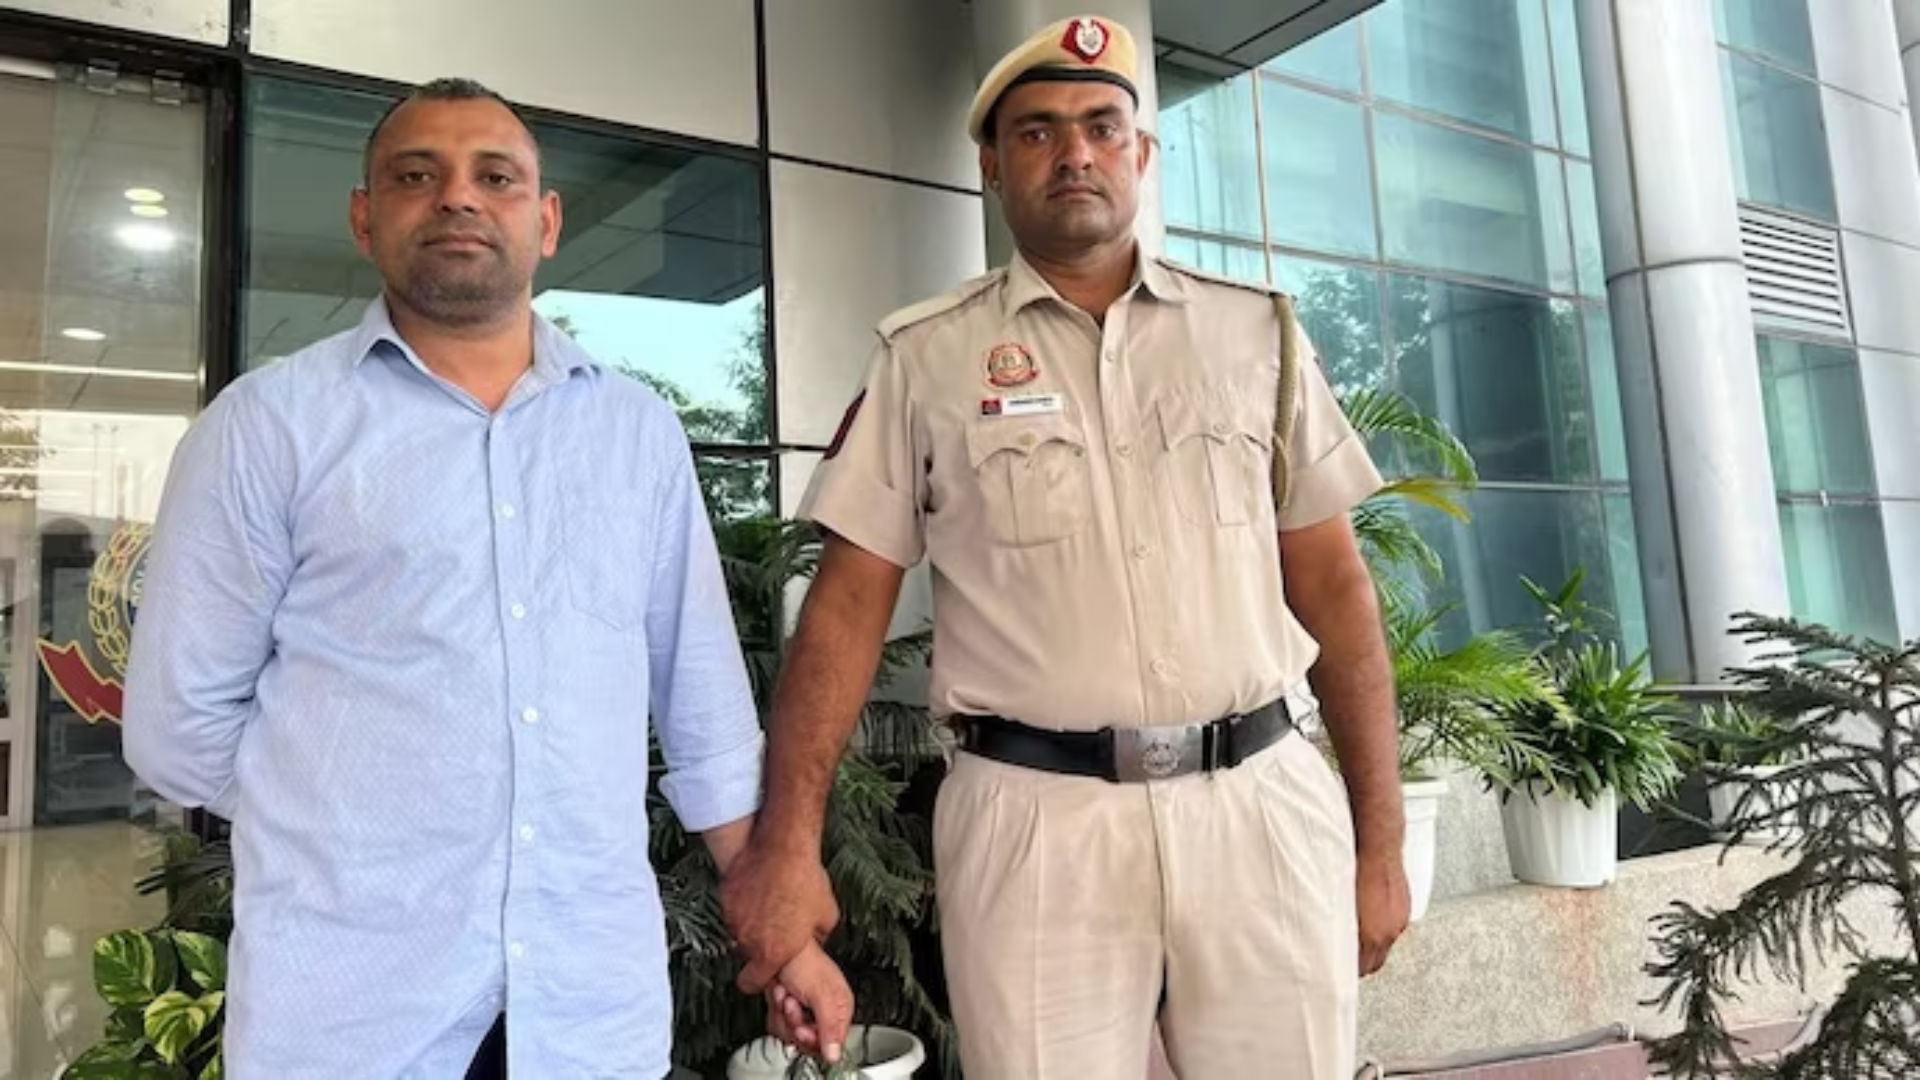 Delhi Man Impersonating Wing Commander Arrested at Air Force Station